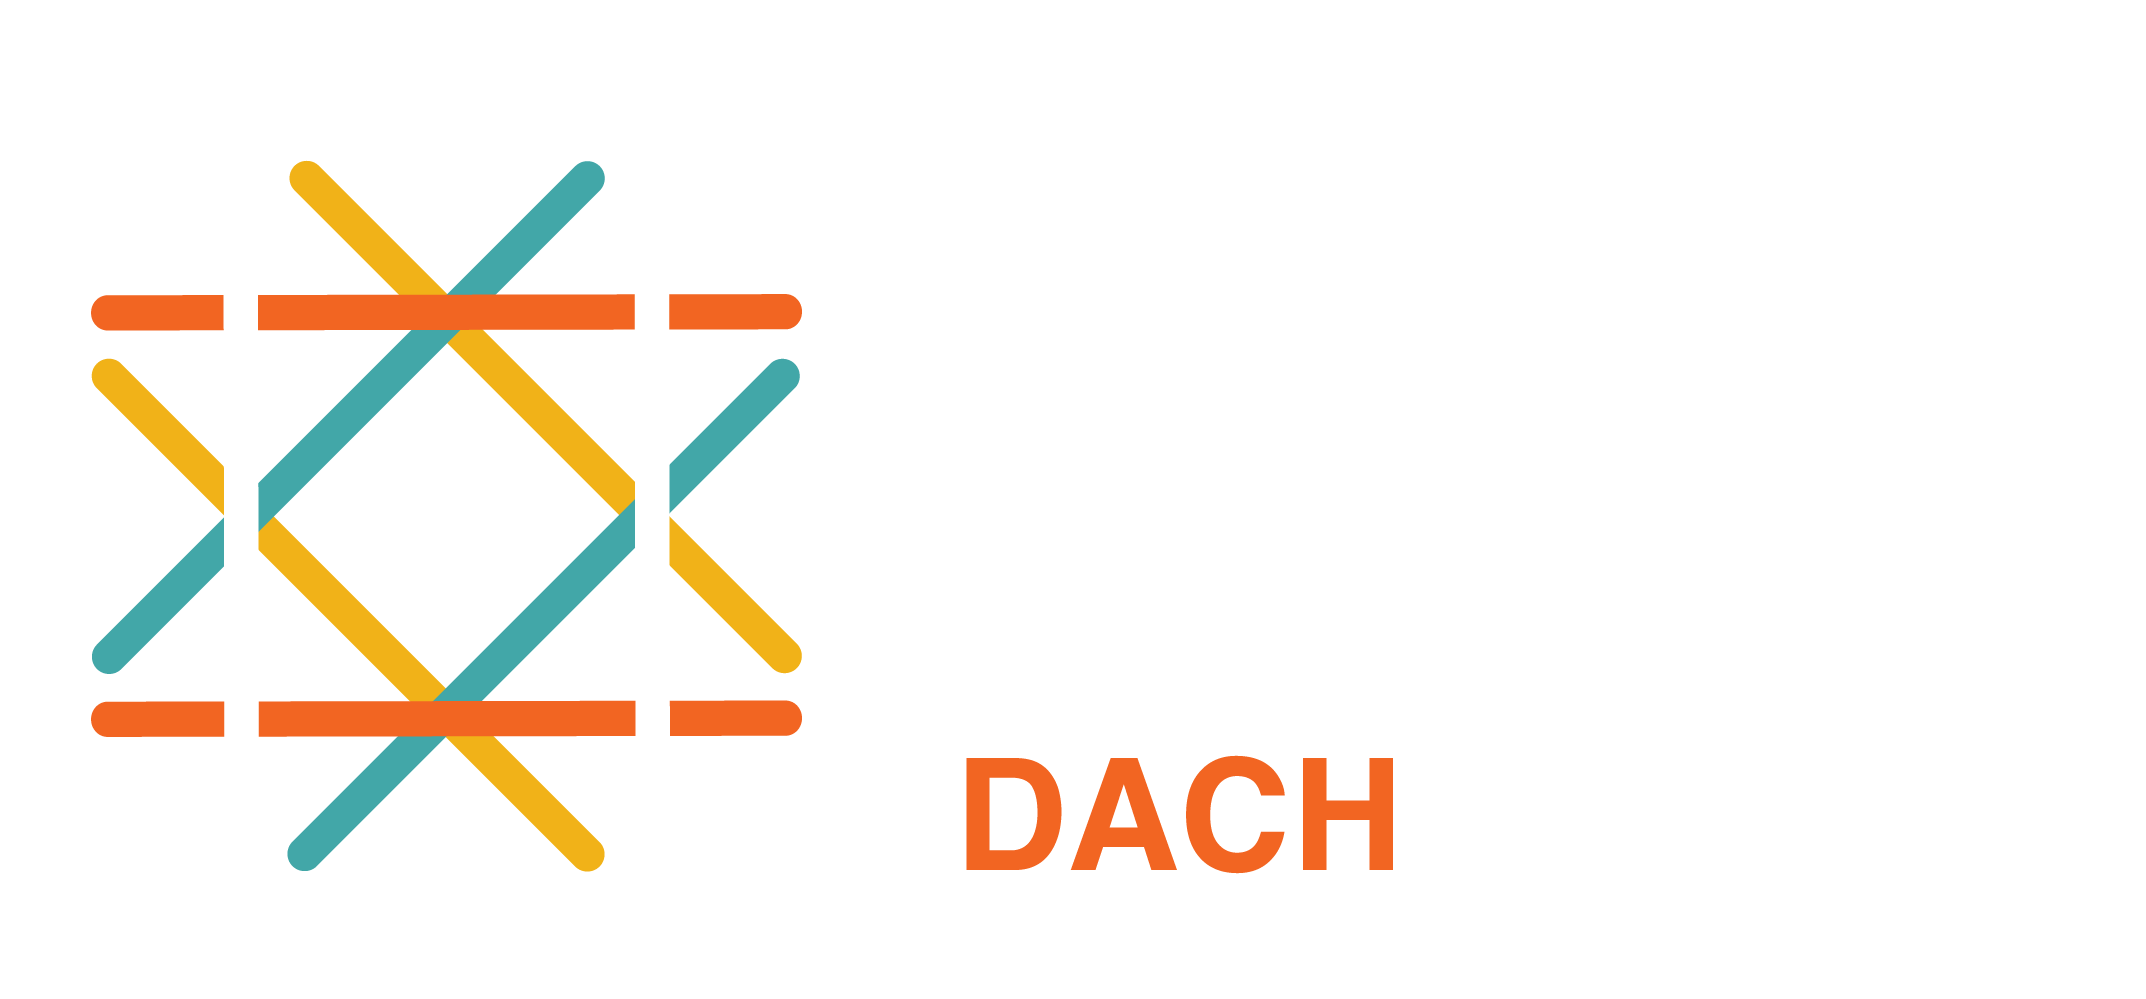 DACH Chief Data Officer Network